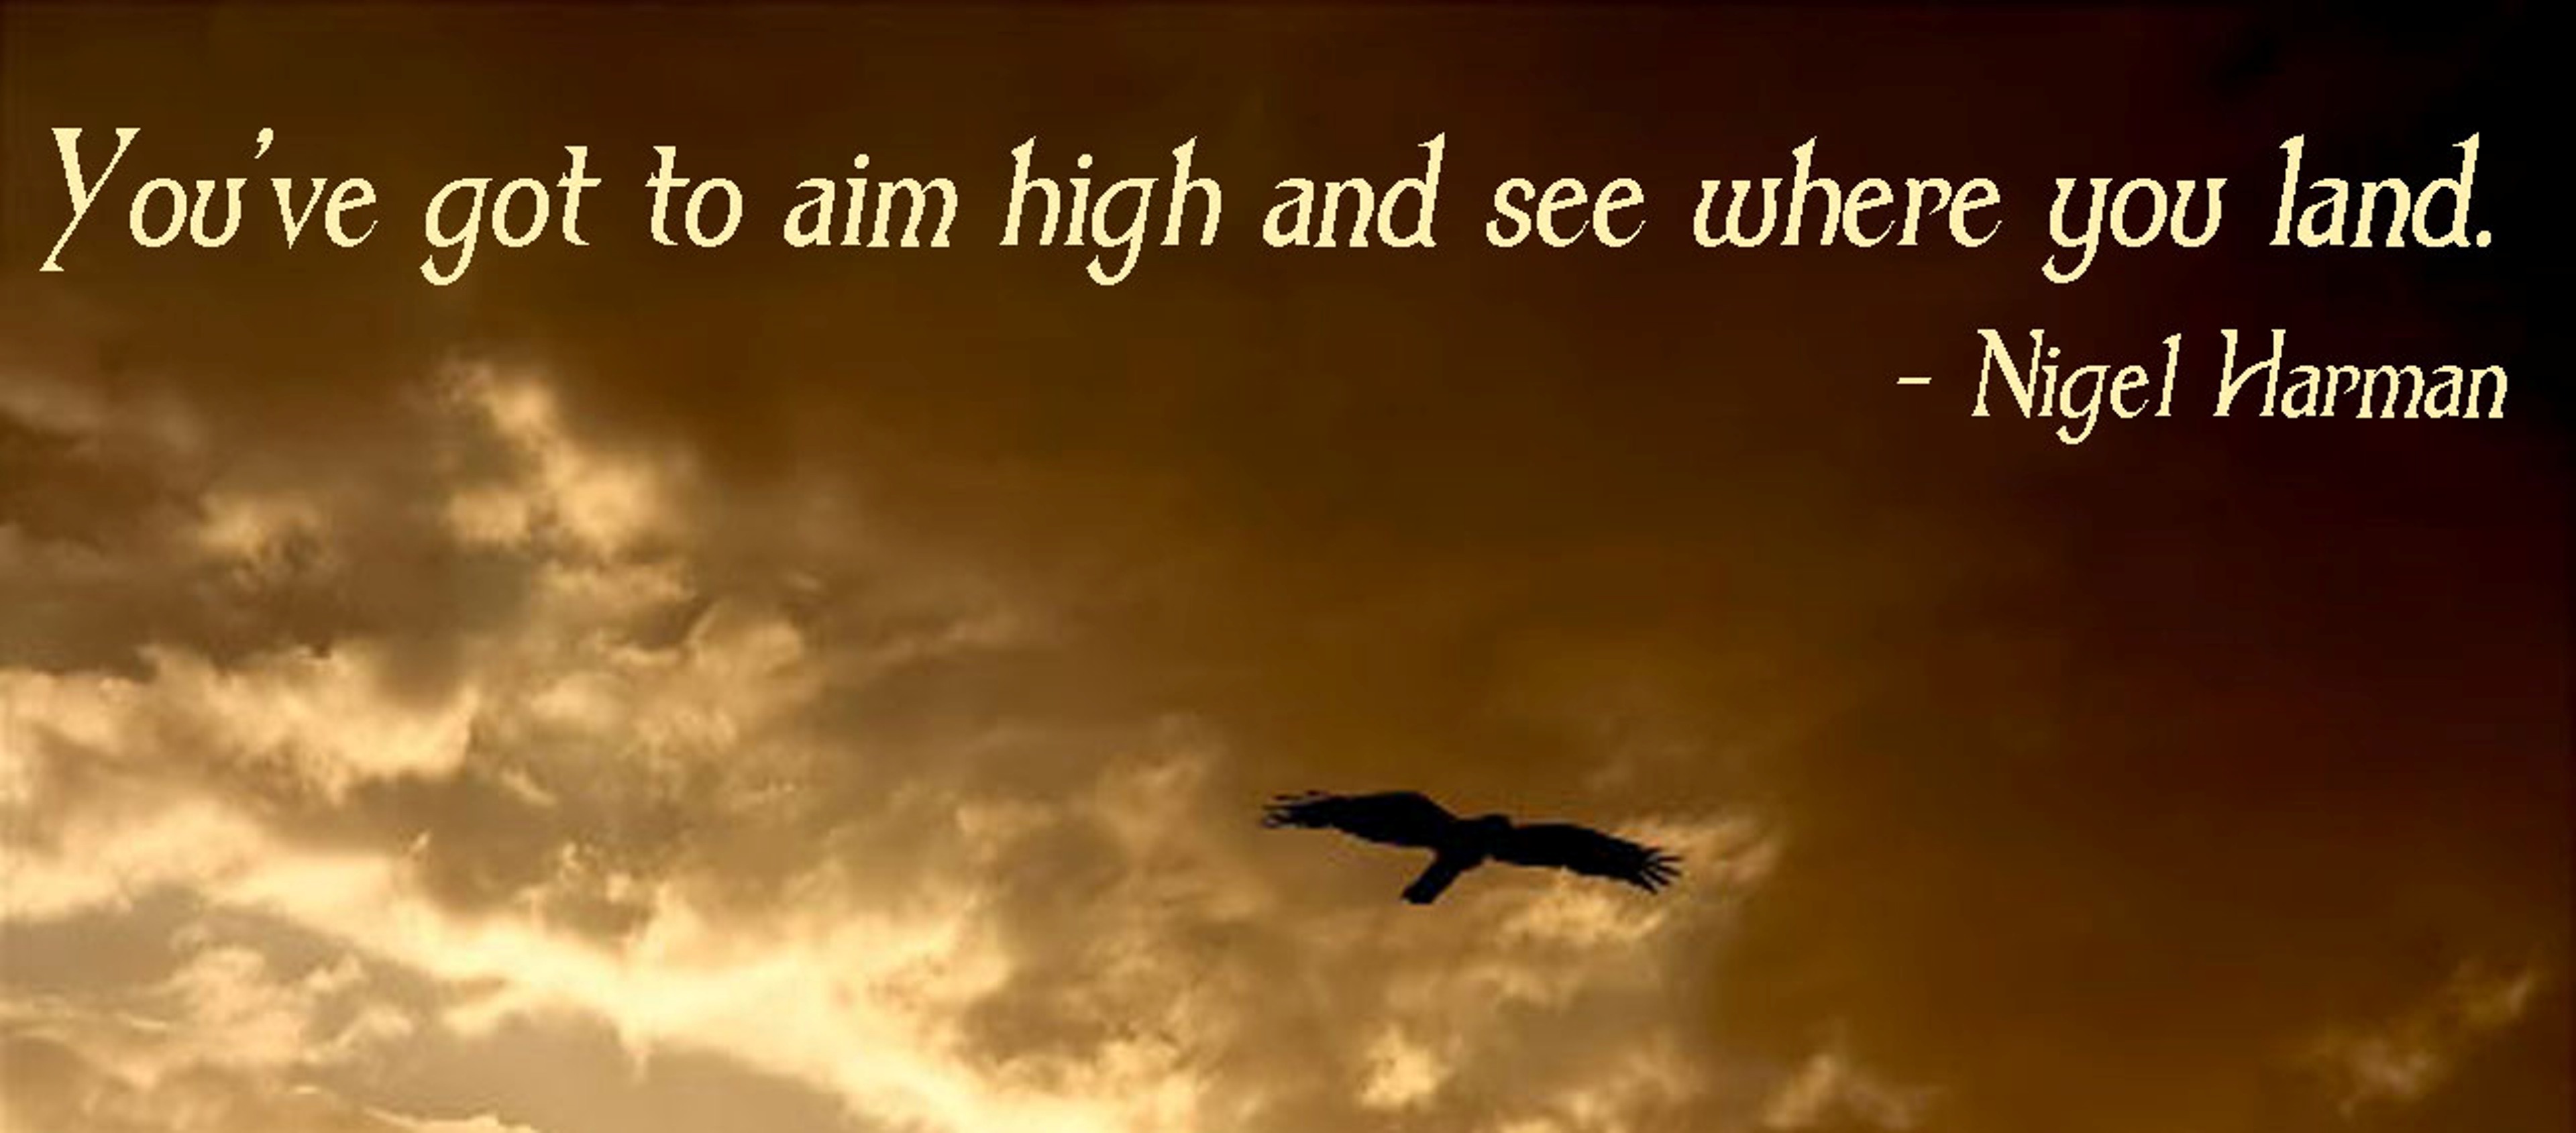 You've got to aim high and see where you land. Nigel Harman